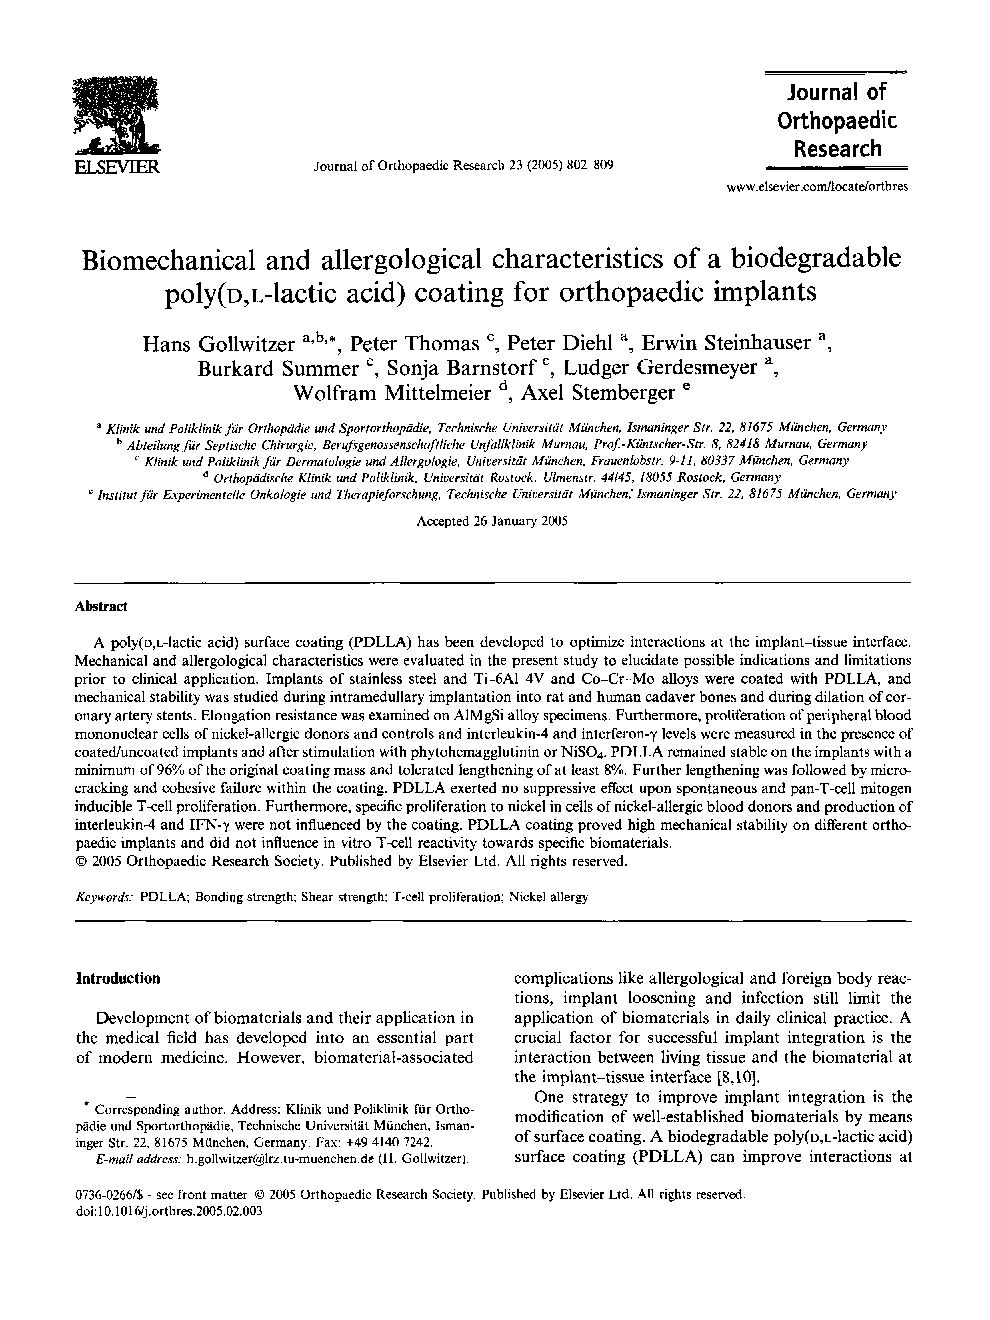 Biomechanical and allergological characteristics of a biodegradable poly(d,l-lactic acid) coating for orthopaedic implants